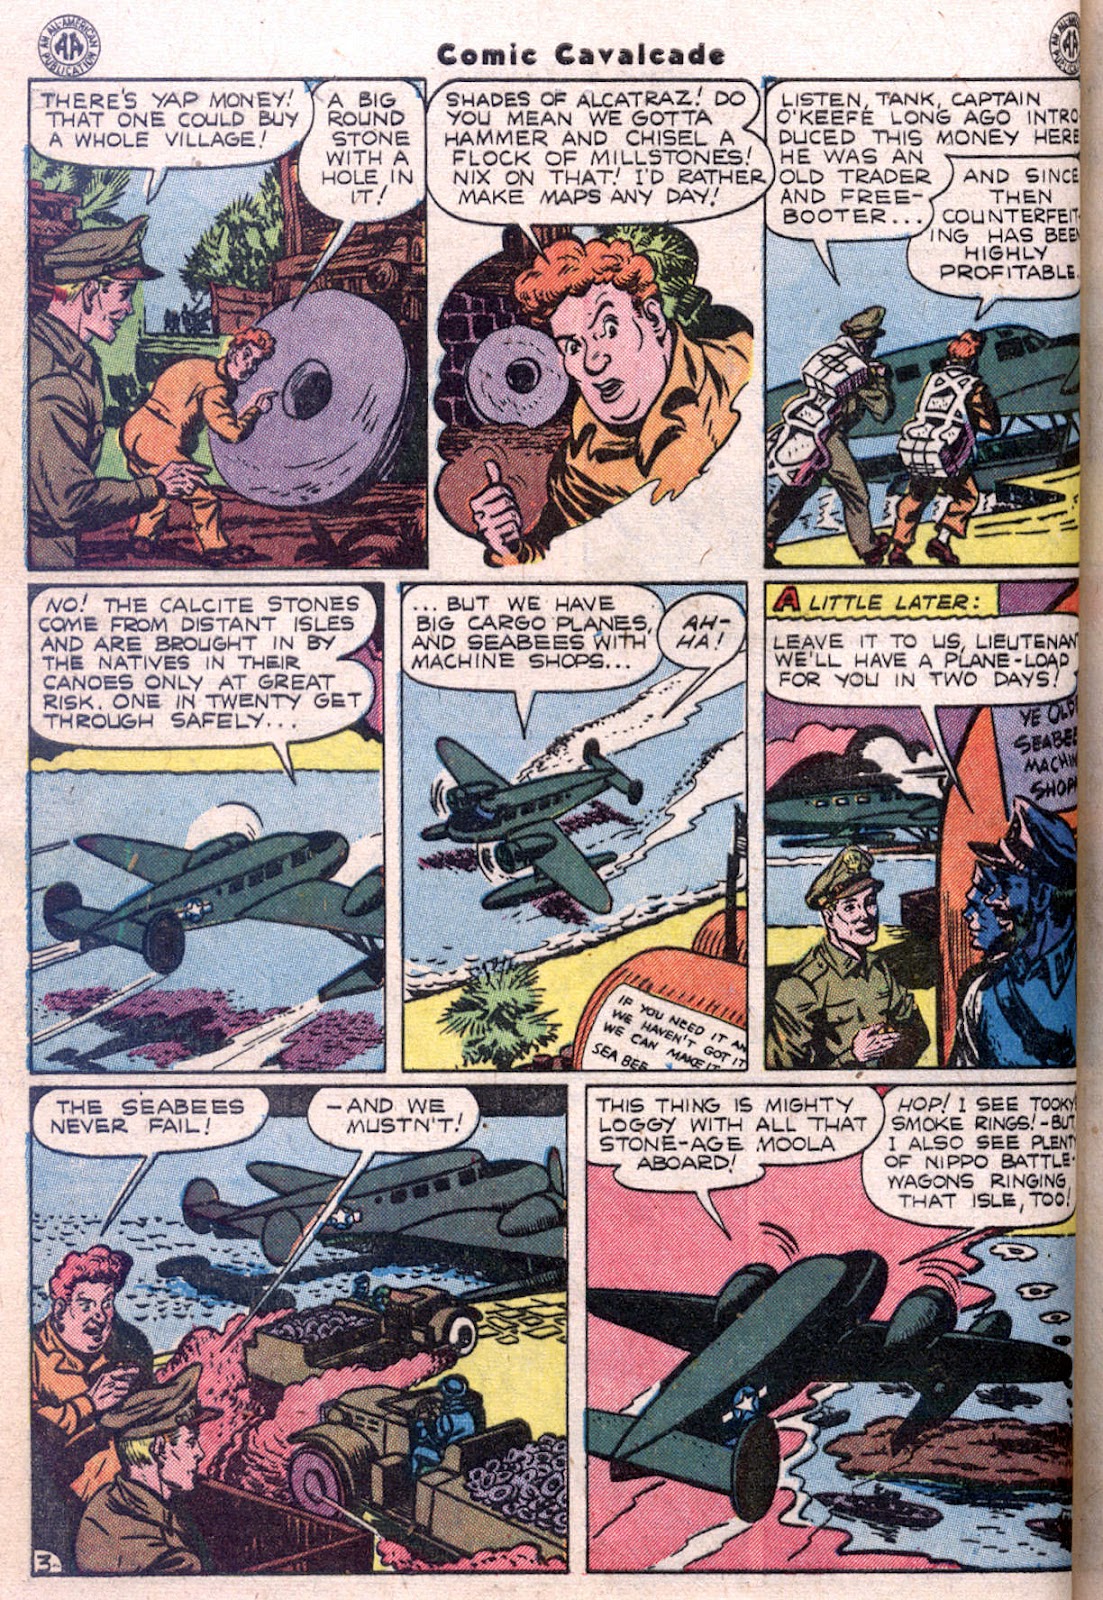 Comic Cavalcade issue 11 - Page 36